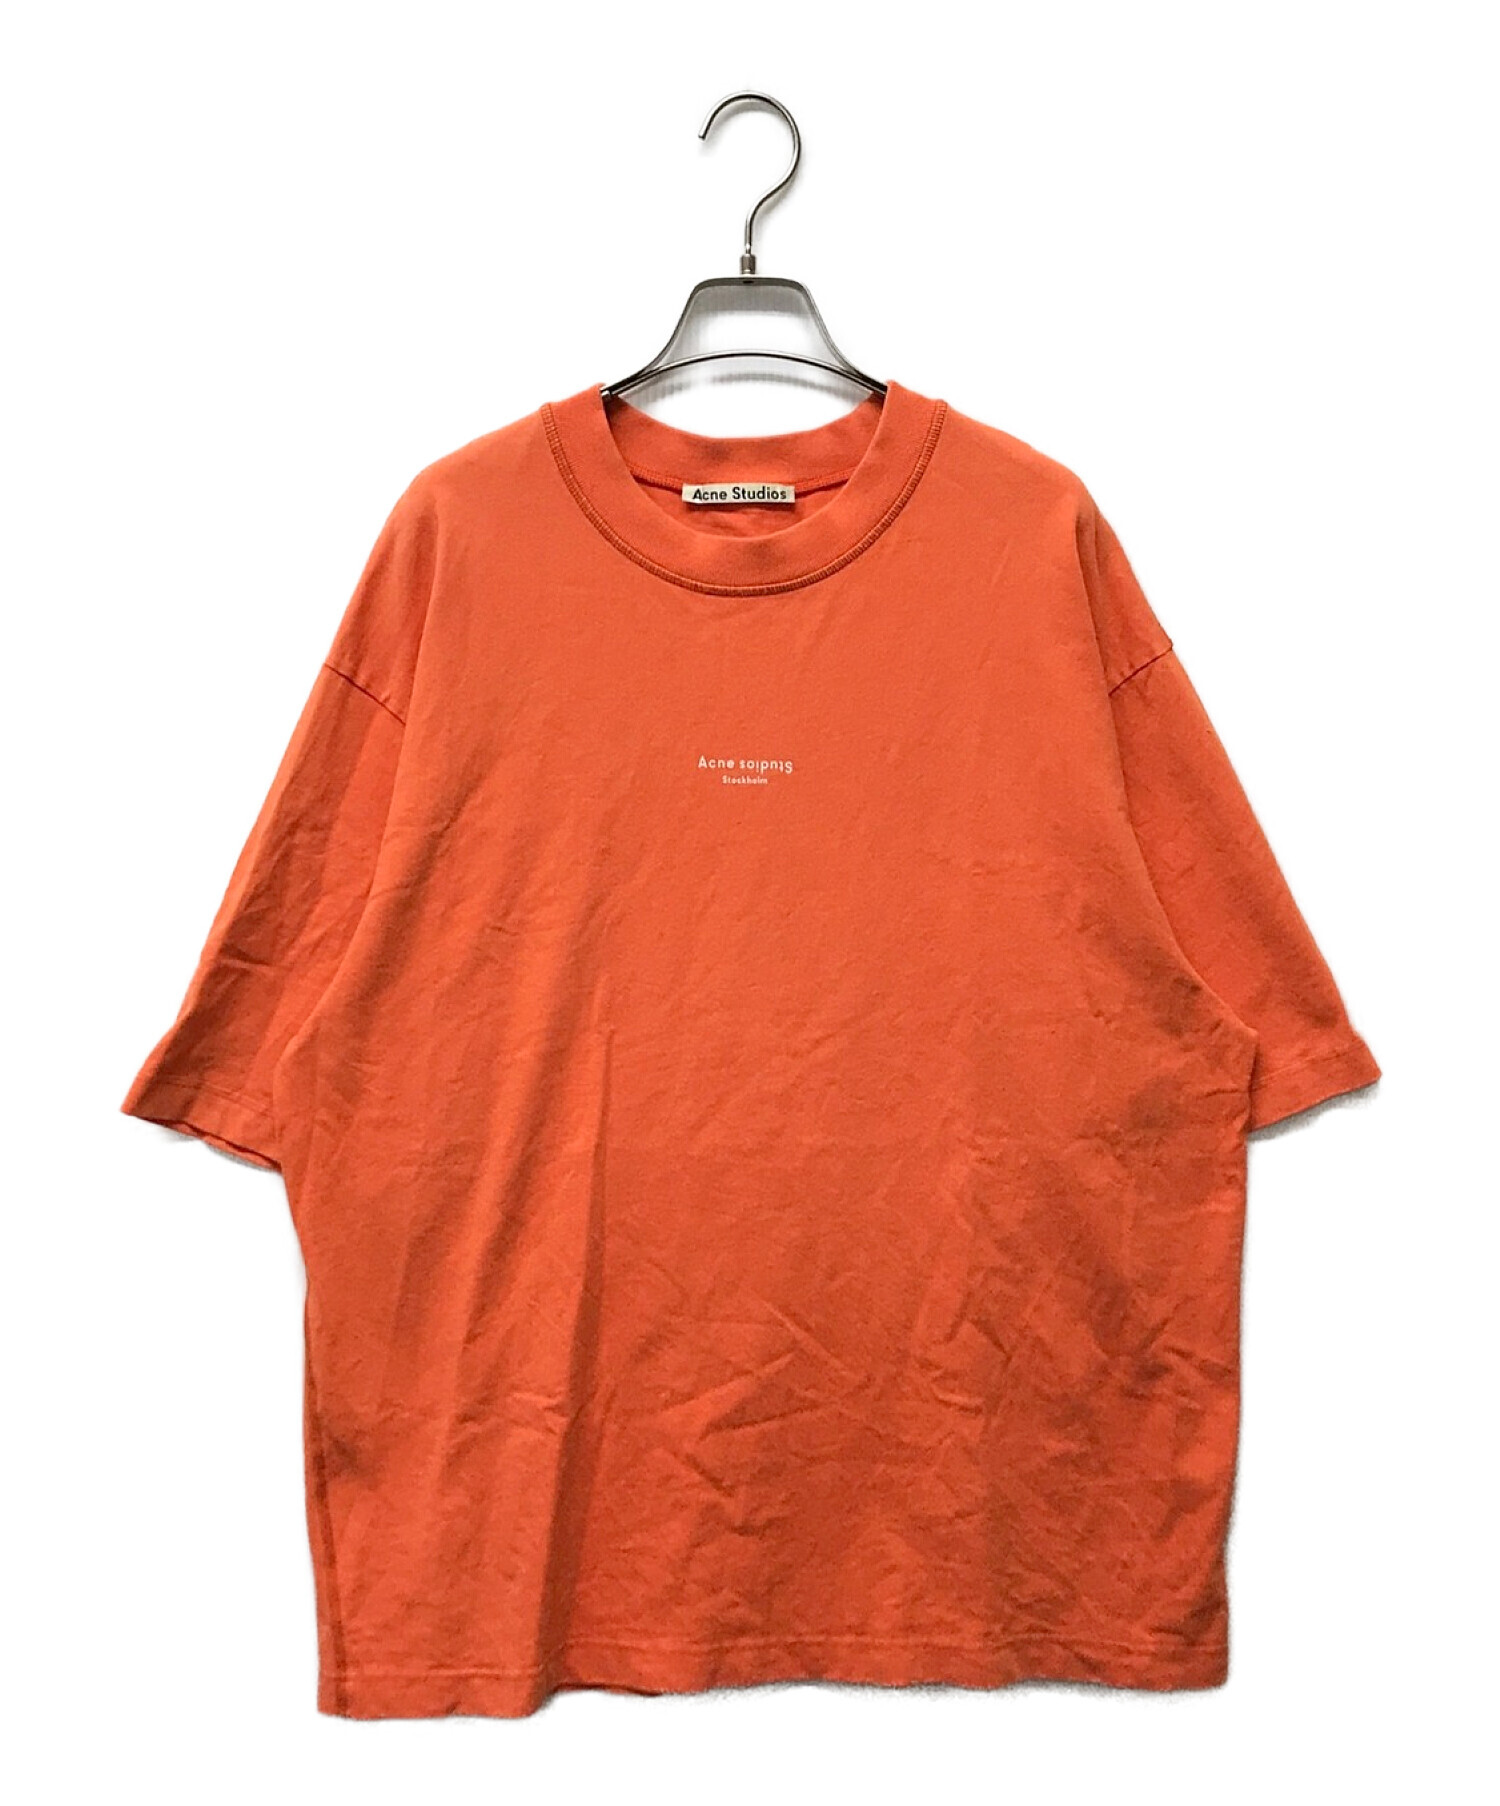 Acne studios (アクネストゥディオス) リバースロゴプリントTシャツ オレンジ サイズ:M